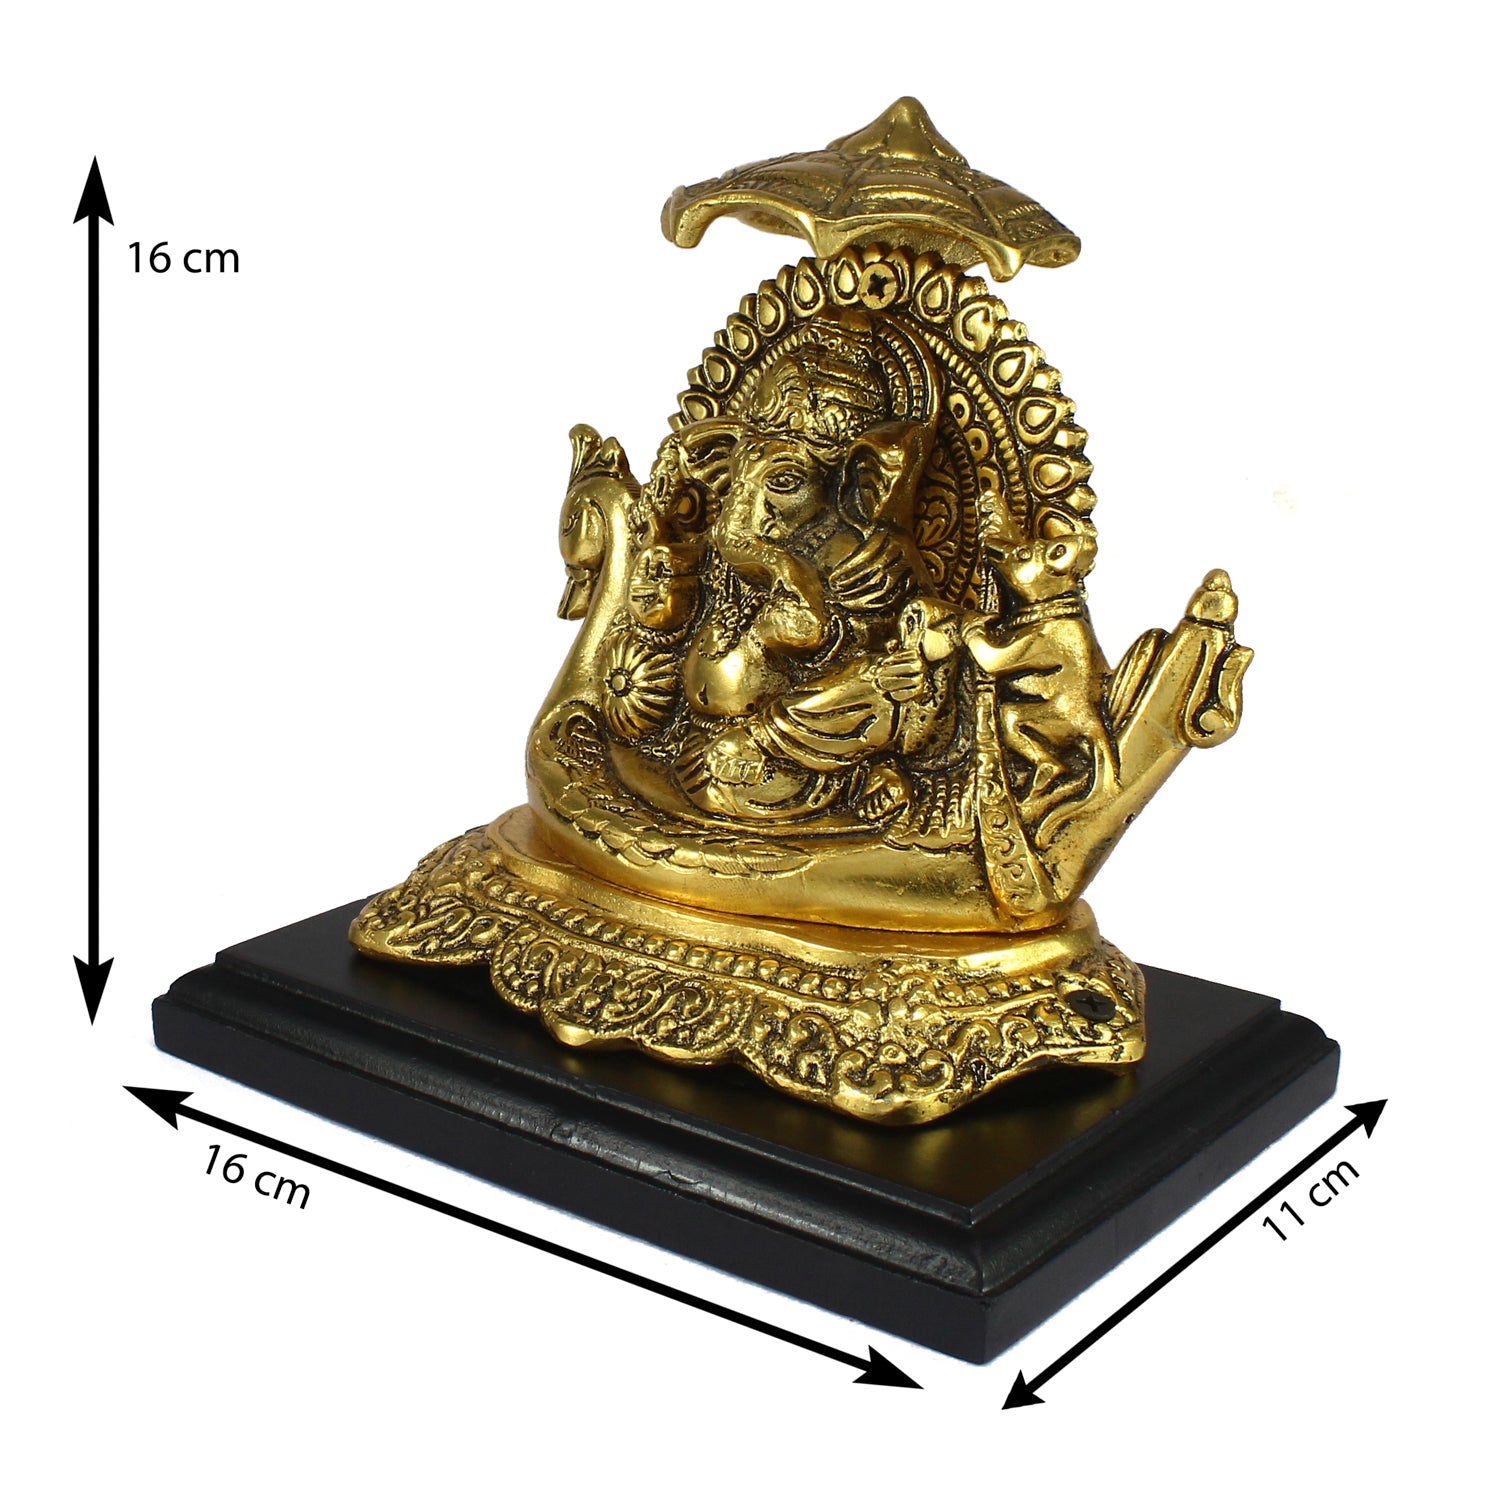 Golden Lord Ganesha sitting on Swan Throne 2